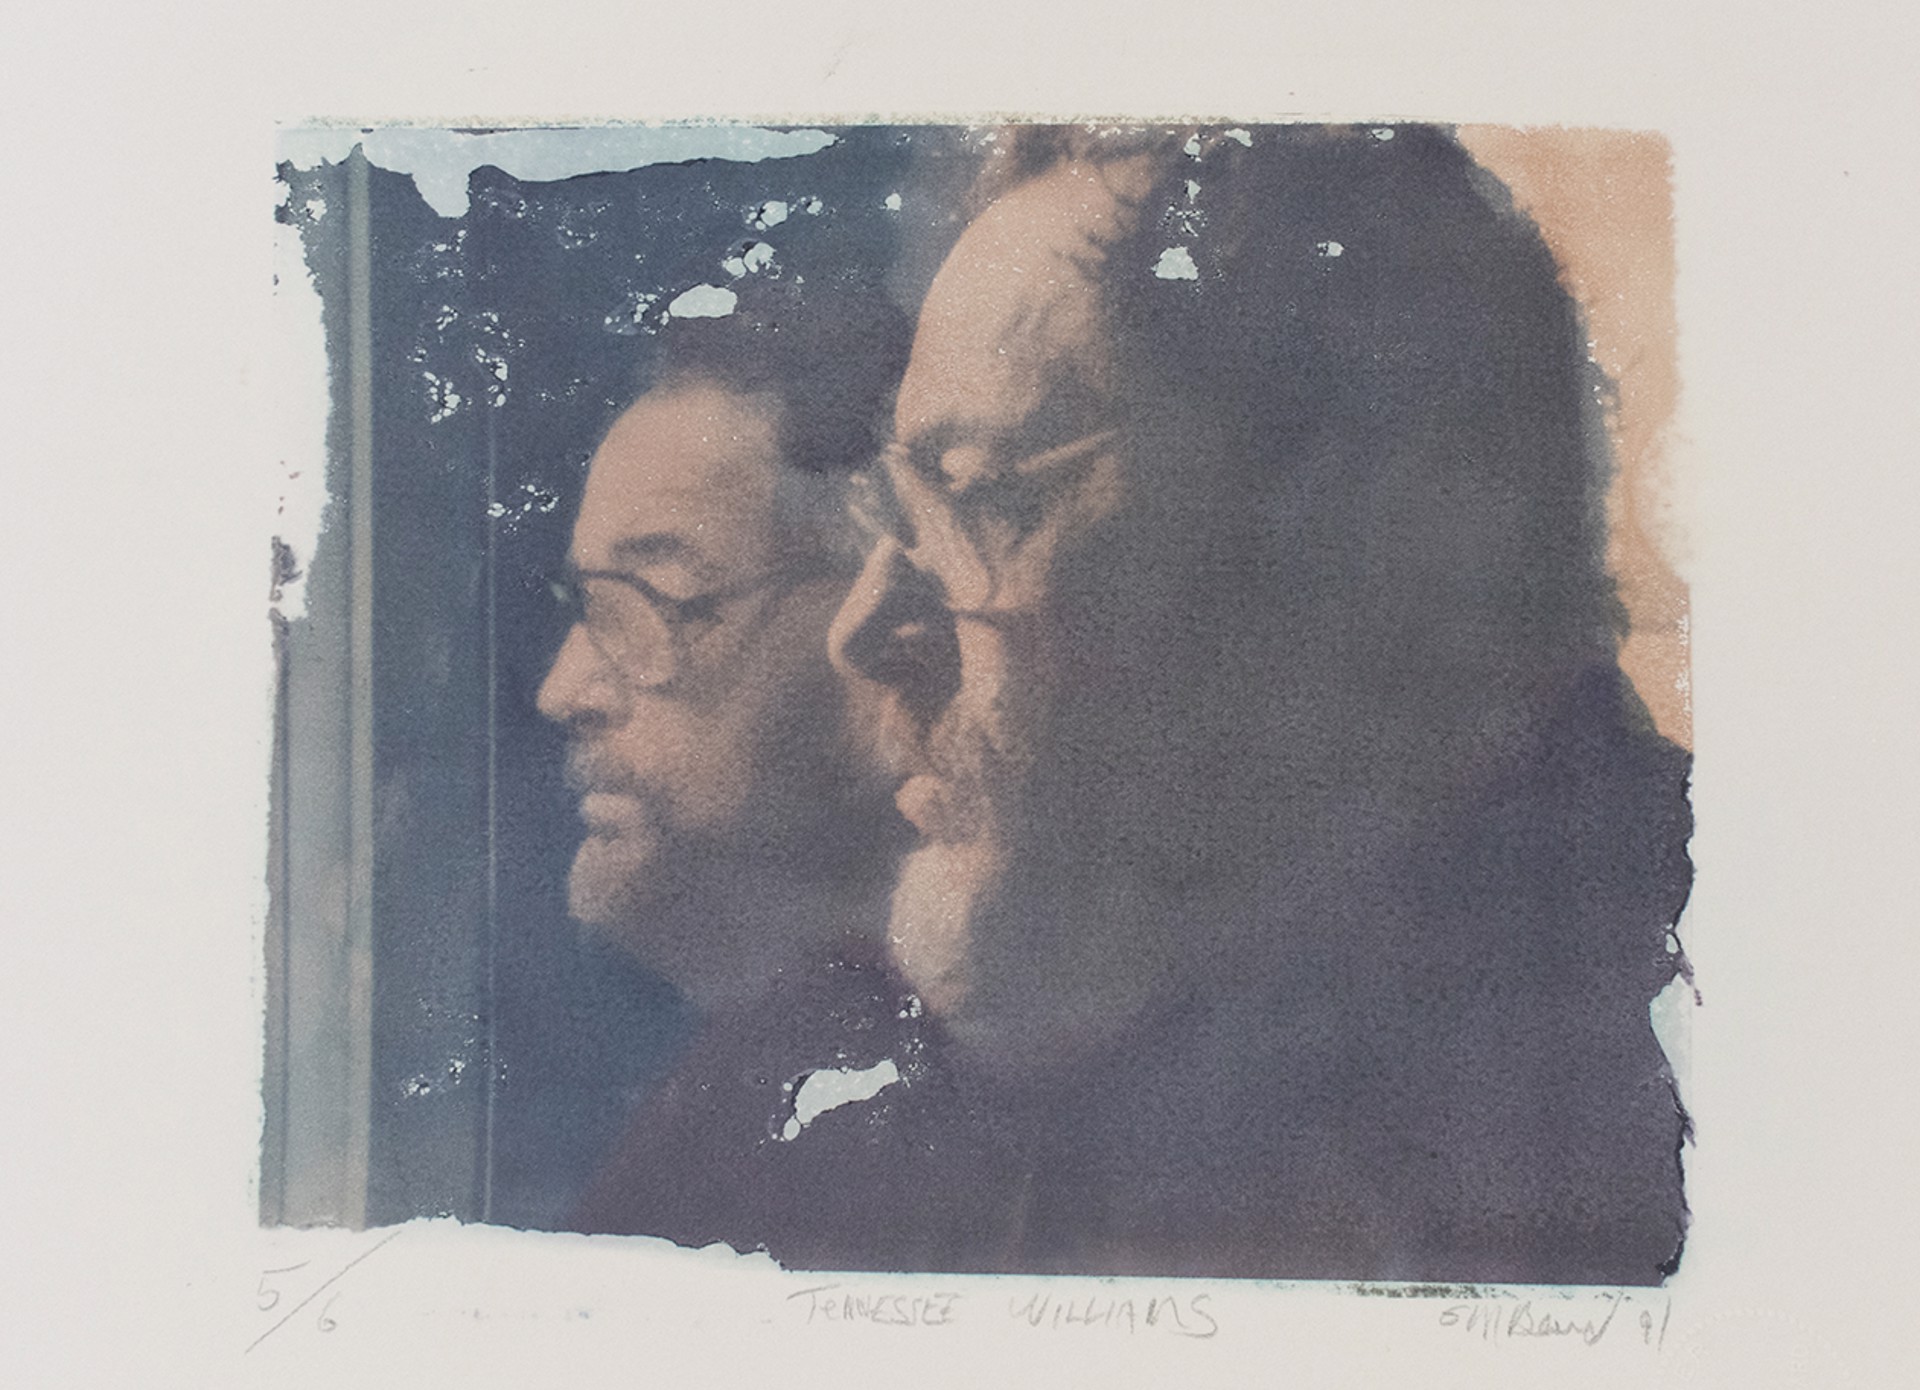 Polaroid Transfer #15 (Tennessee Williams) by Mark Beard